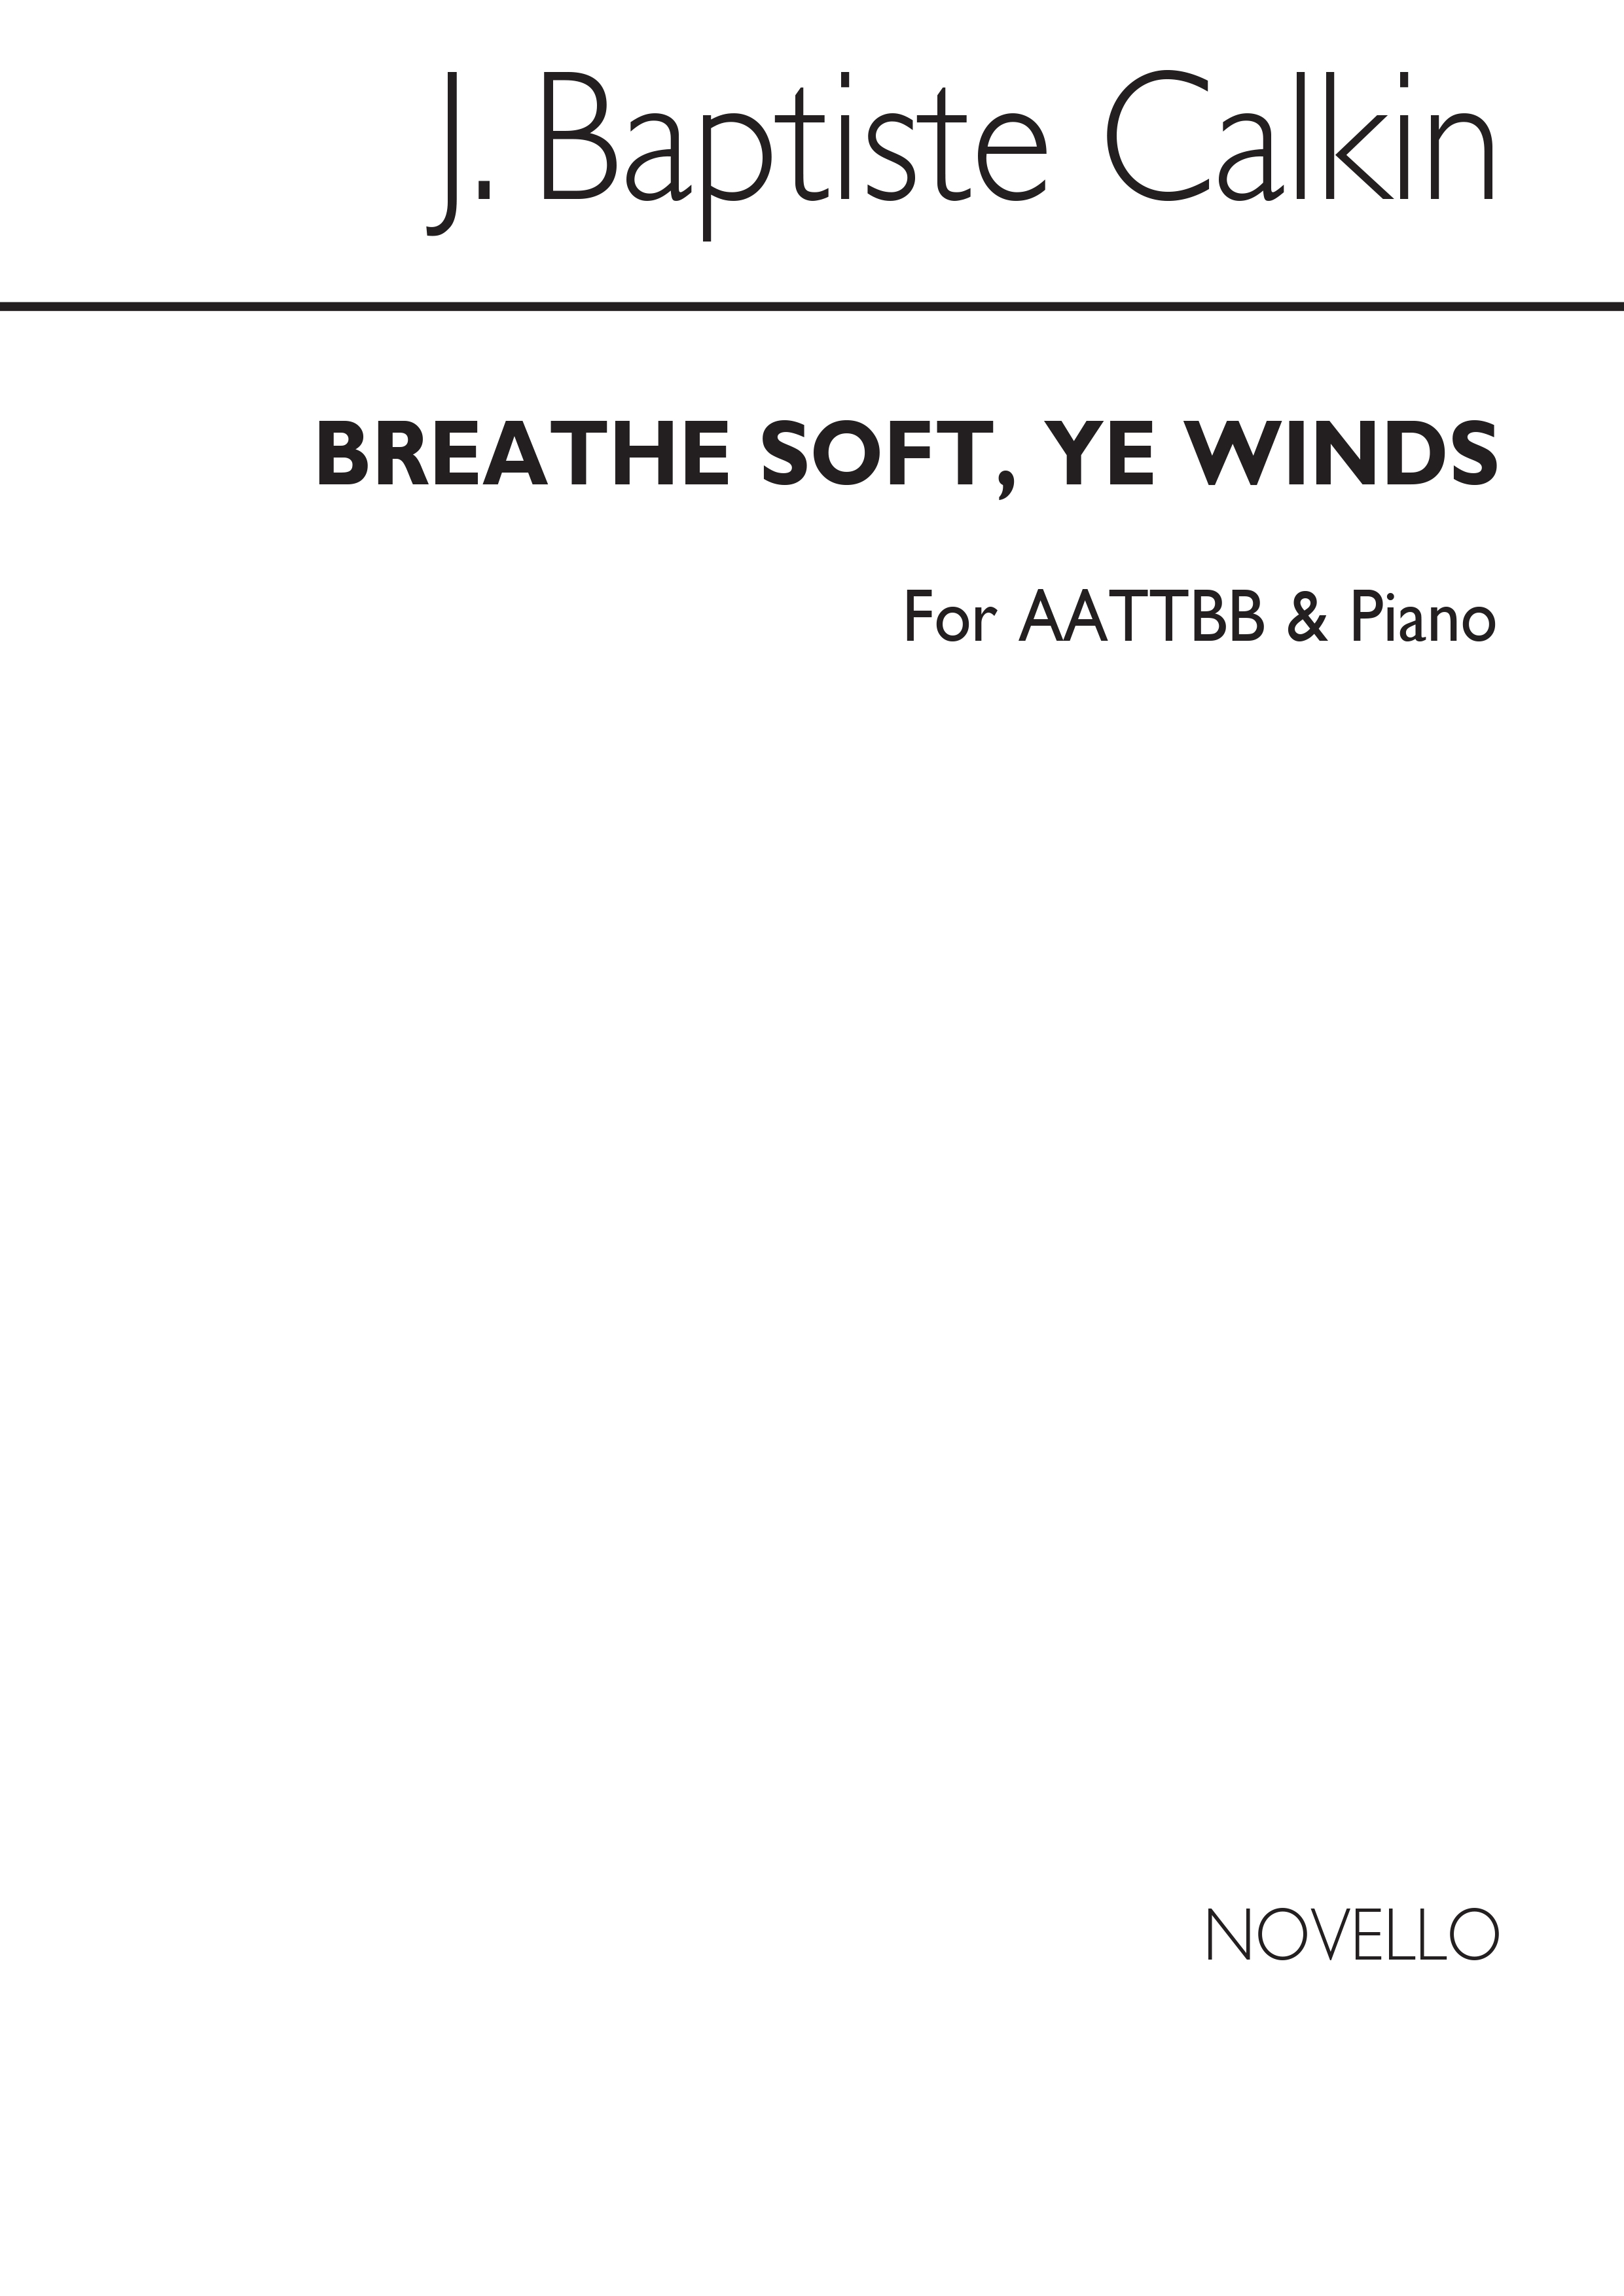 Baptiste Calkin, J Breathe Soft Ye Winds Aattbb And Piano